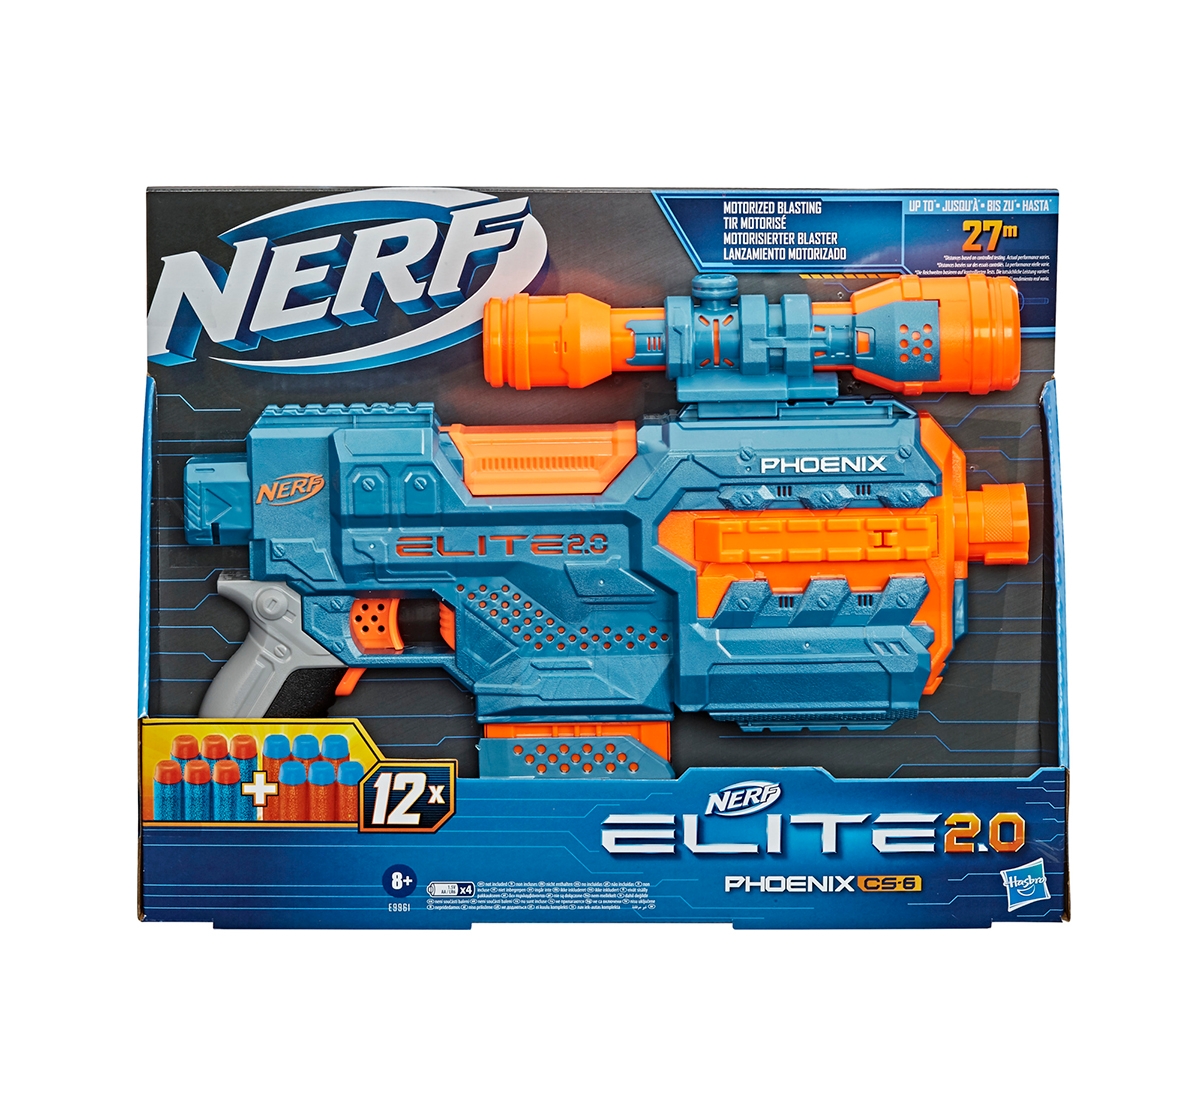 nerf elite scopes